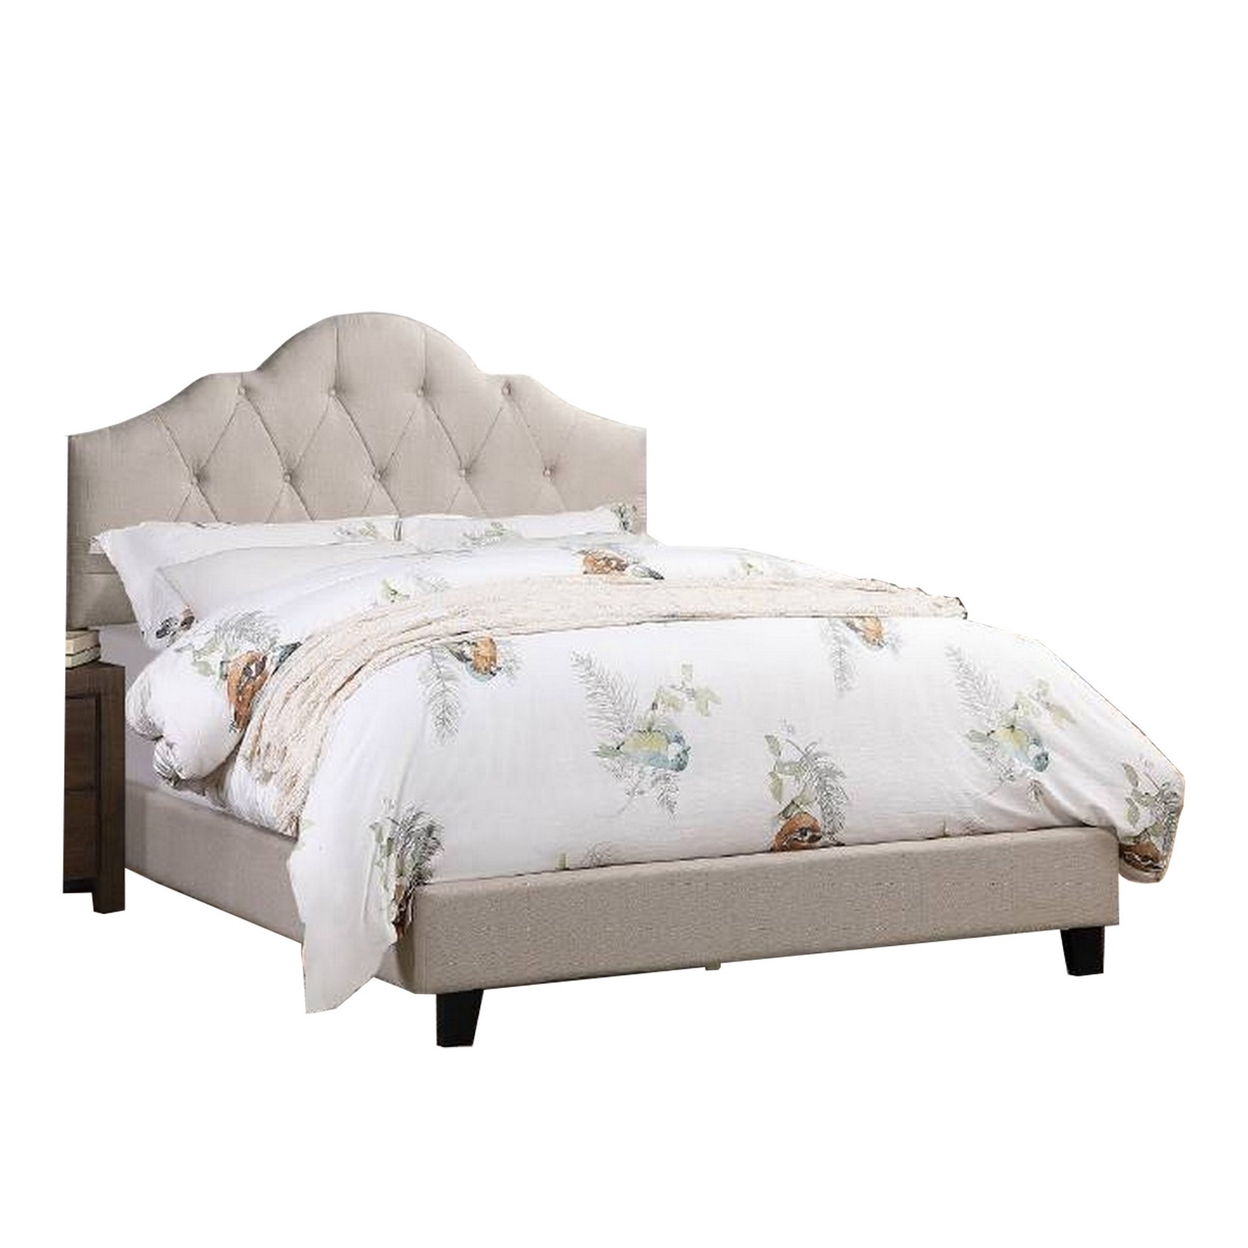 Eni Upholstered California King Size Bed, Taupe Tufted Adjustable Headboard- Saltoro Sherpi